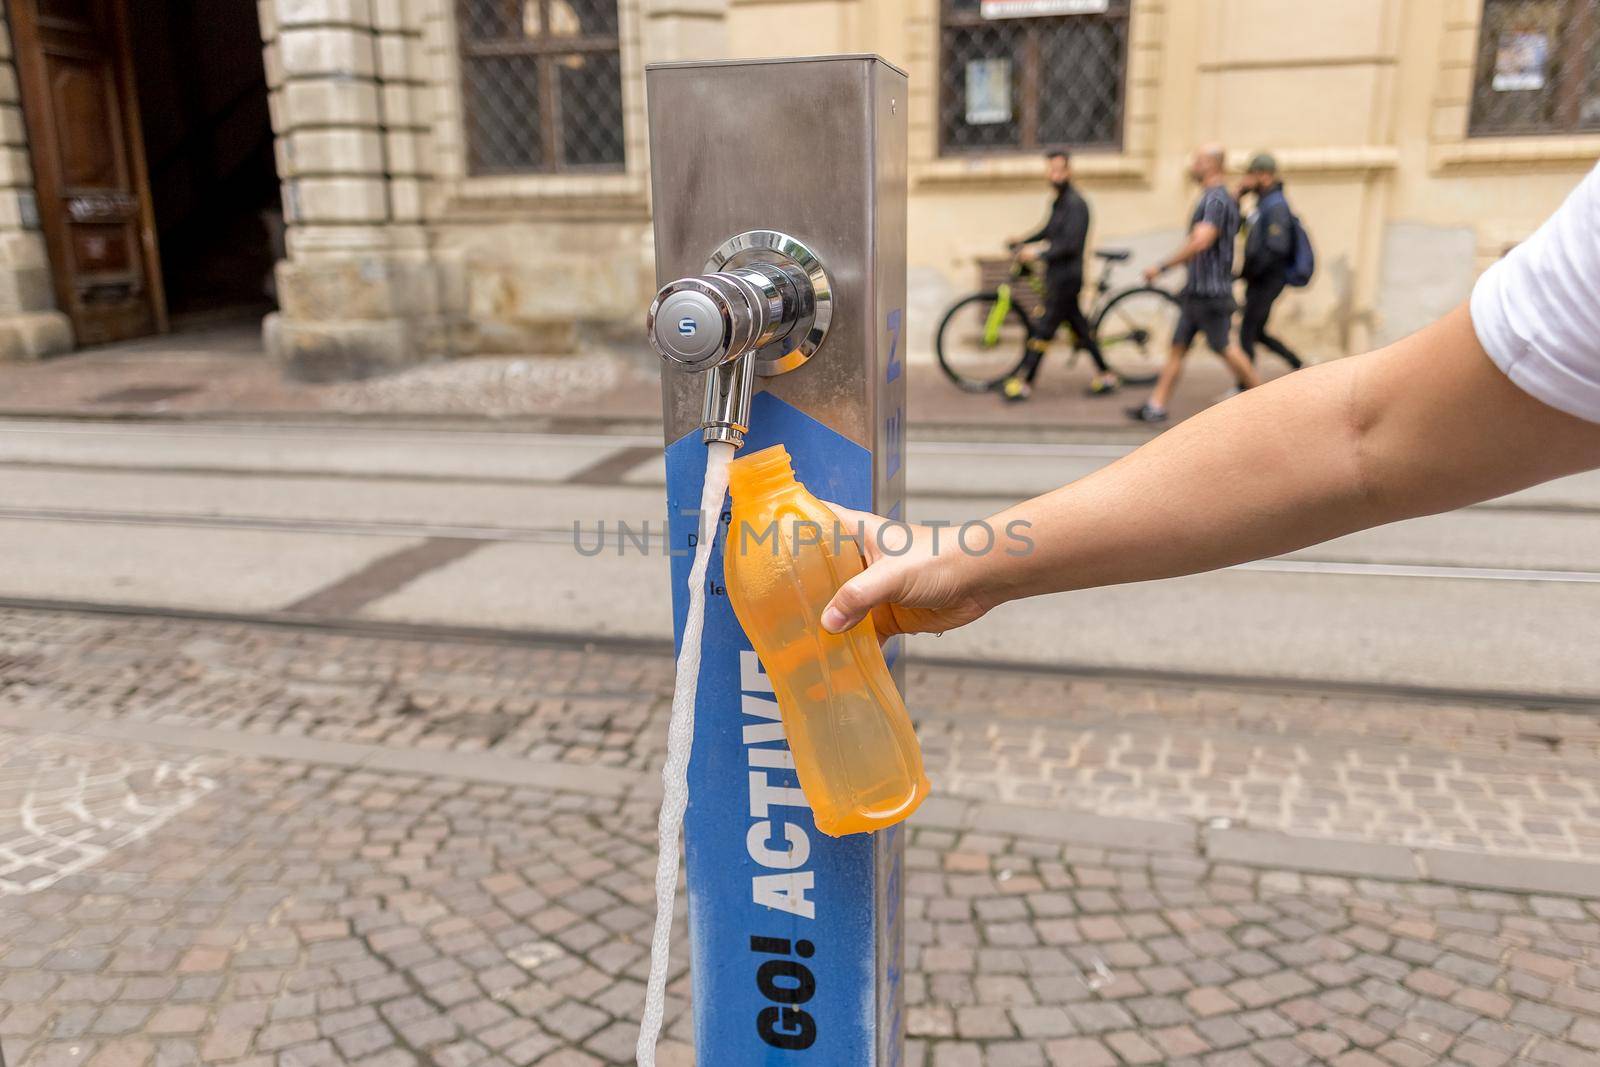 Refilling water bottle in a public tap fountain by Syvanych